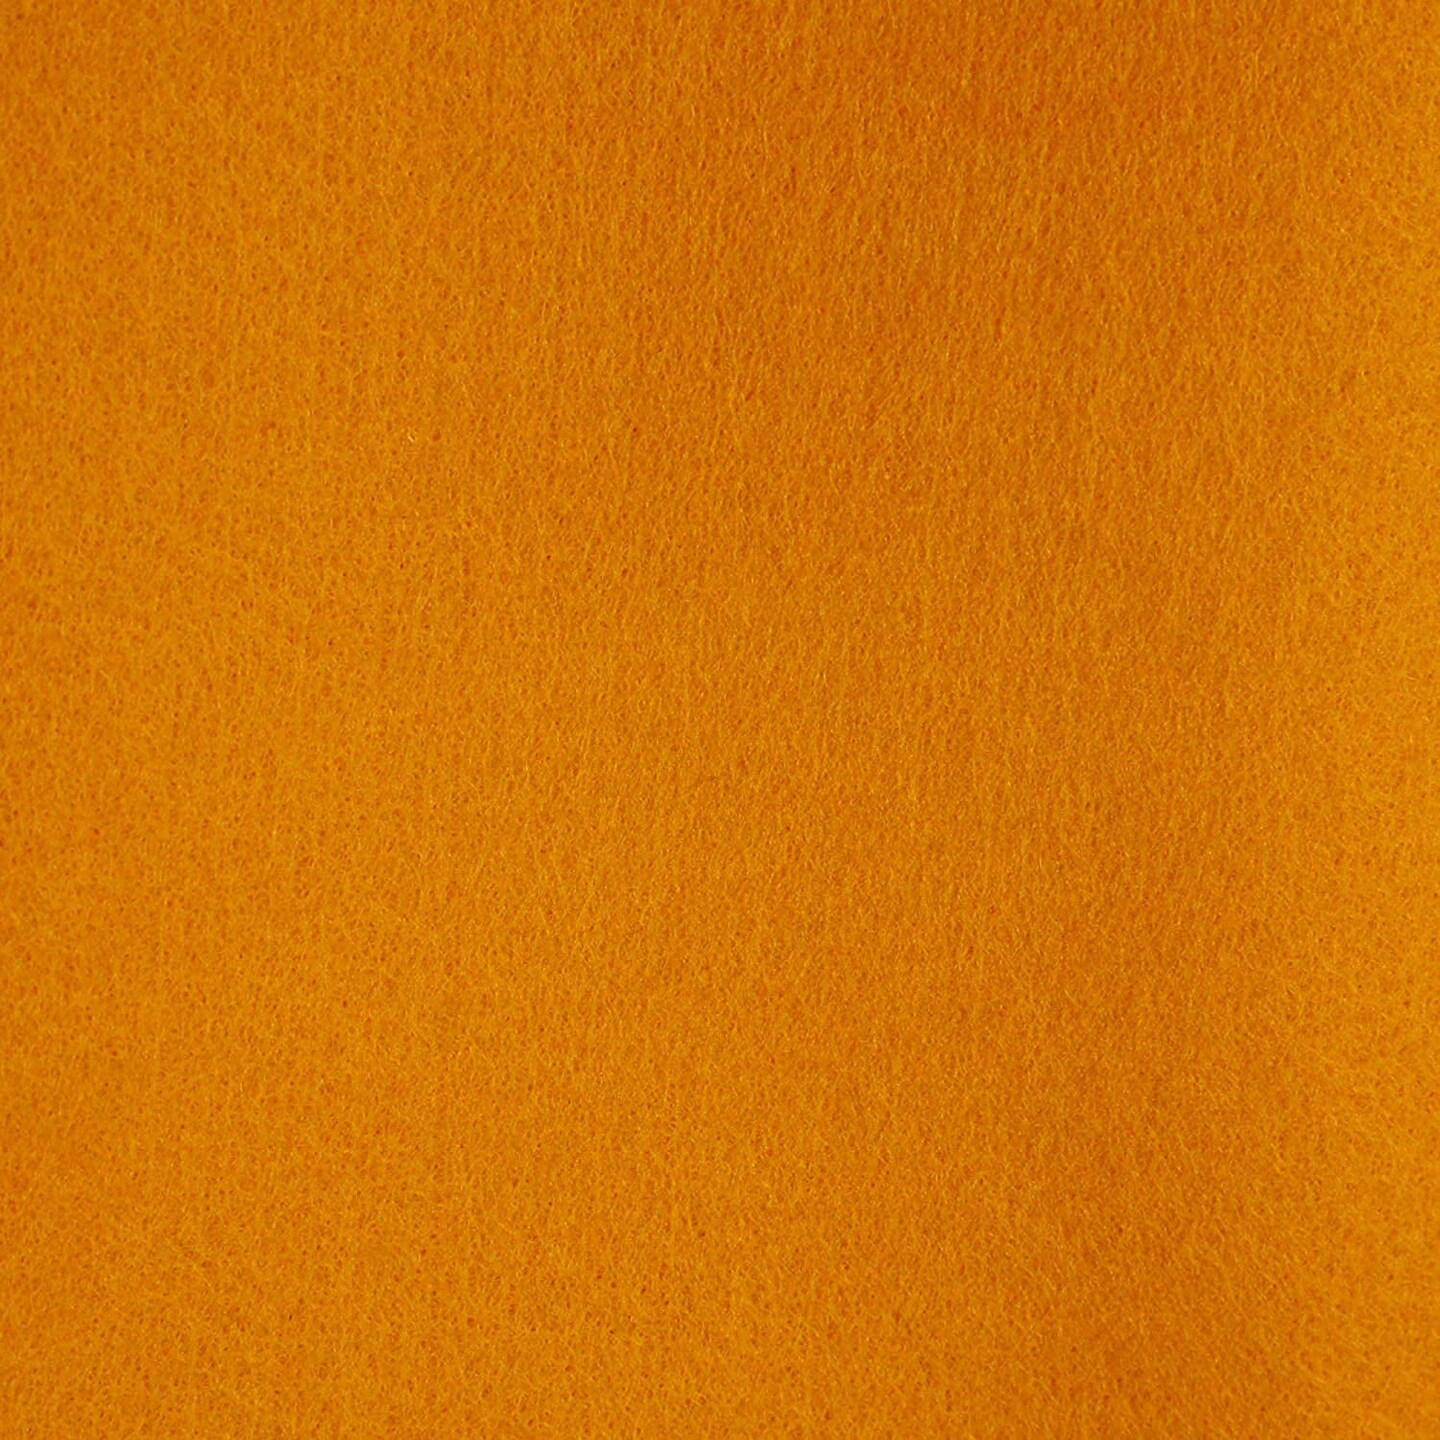 FabricLA Acrylic Felt Fabric - 72 Inch Wide 1.6mm Thick Felt by The Yard -  Use Soft Felt Sheets for Sewing, Cushion, and Padding, DIY Arts & Crafts (6  Yards, Mango)